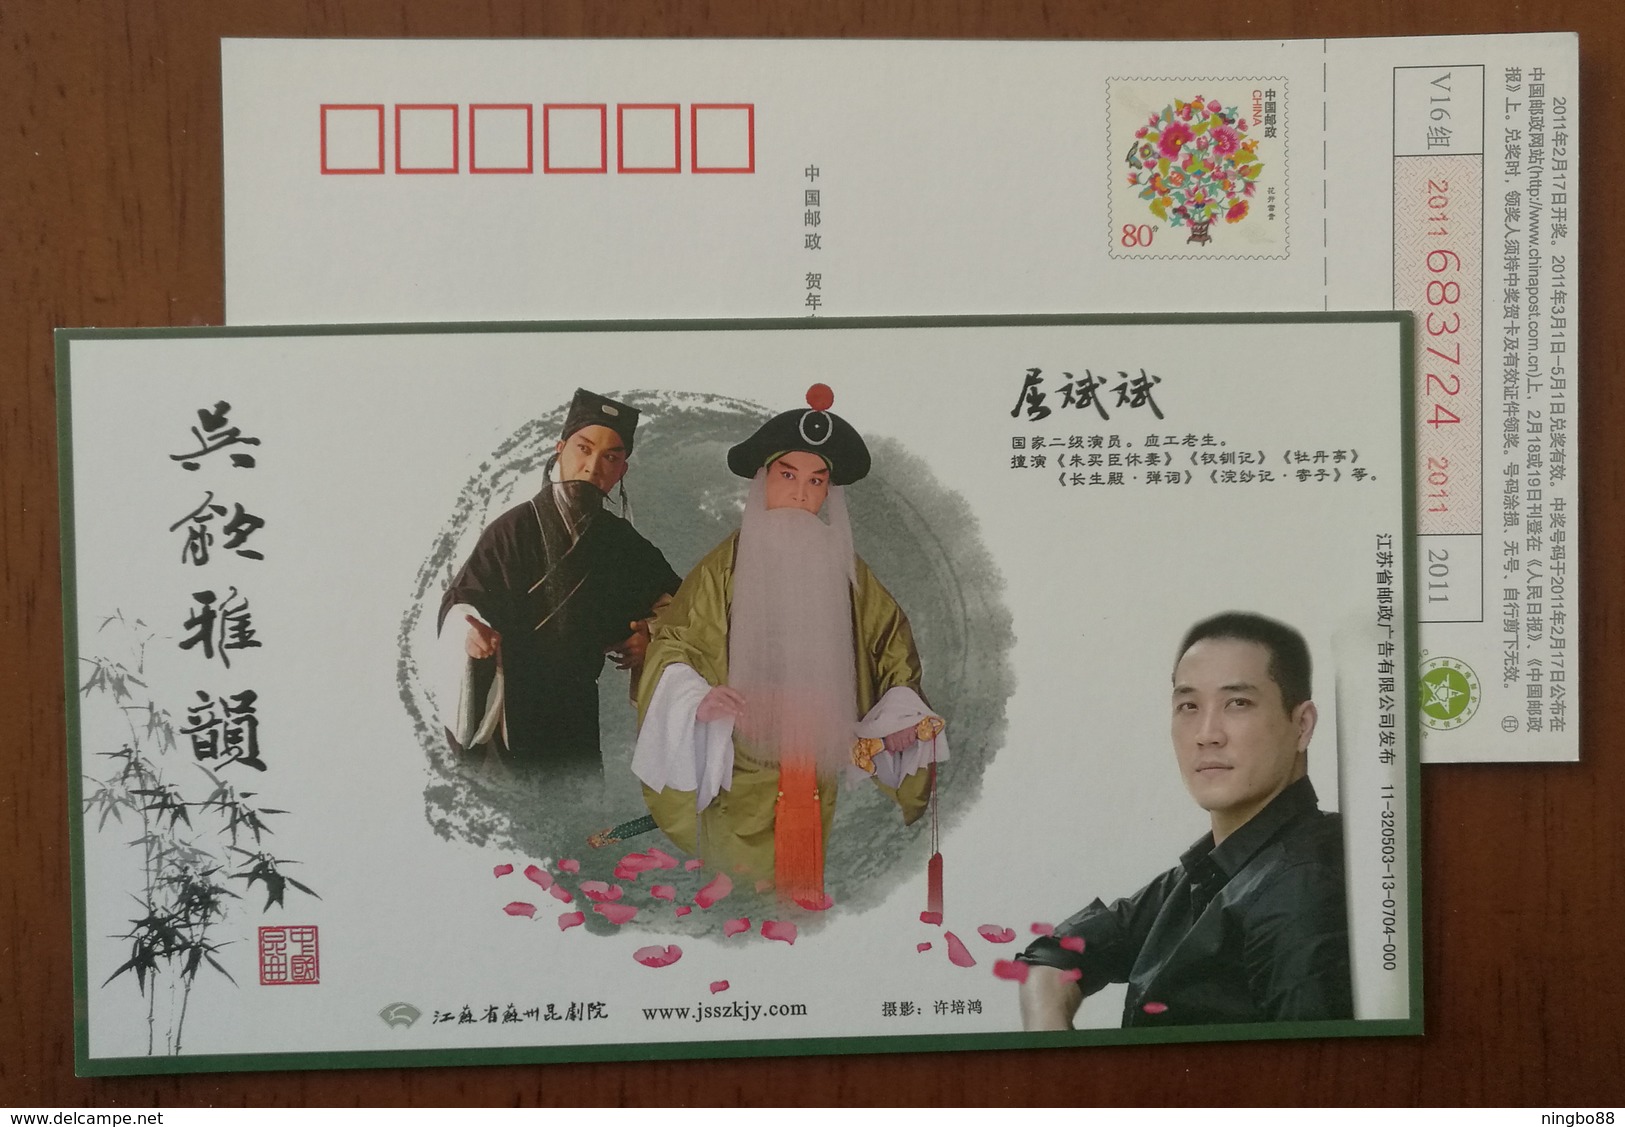 National Second Class Actor Qubinbin,bamboo,China 2011 Jiangsu Kunju Opera Academy Advert Pre-stamped Card - Theatre